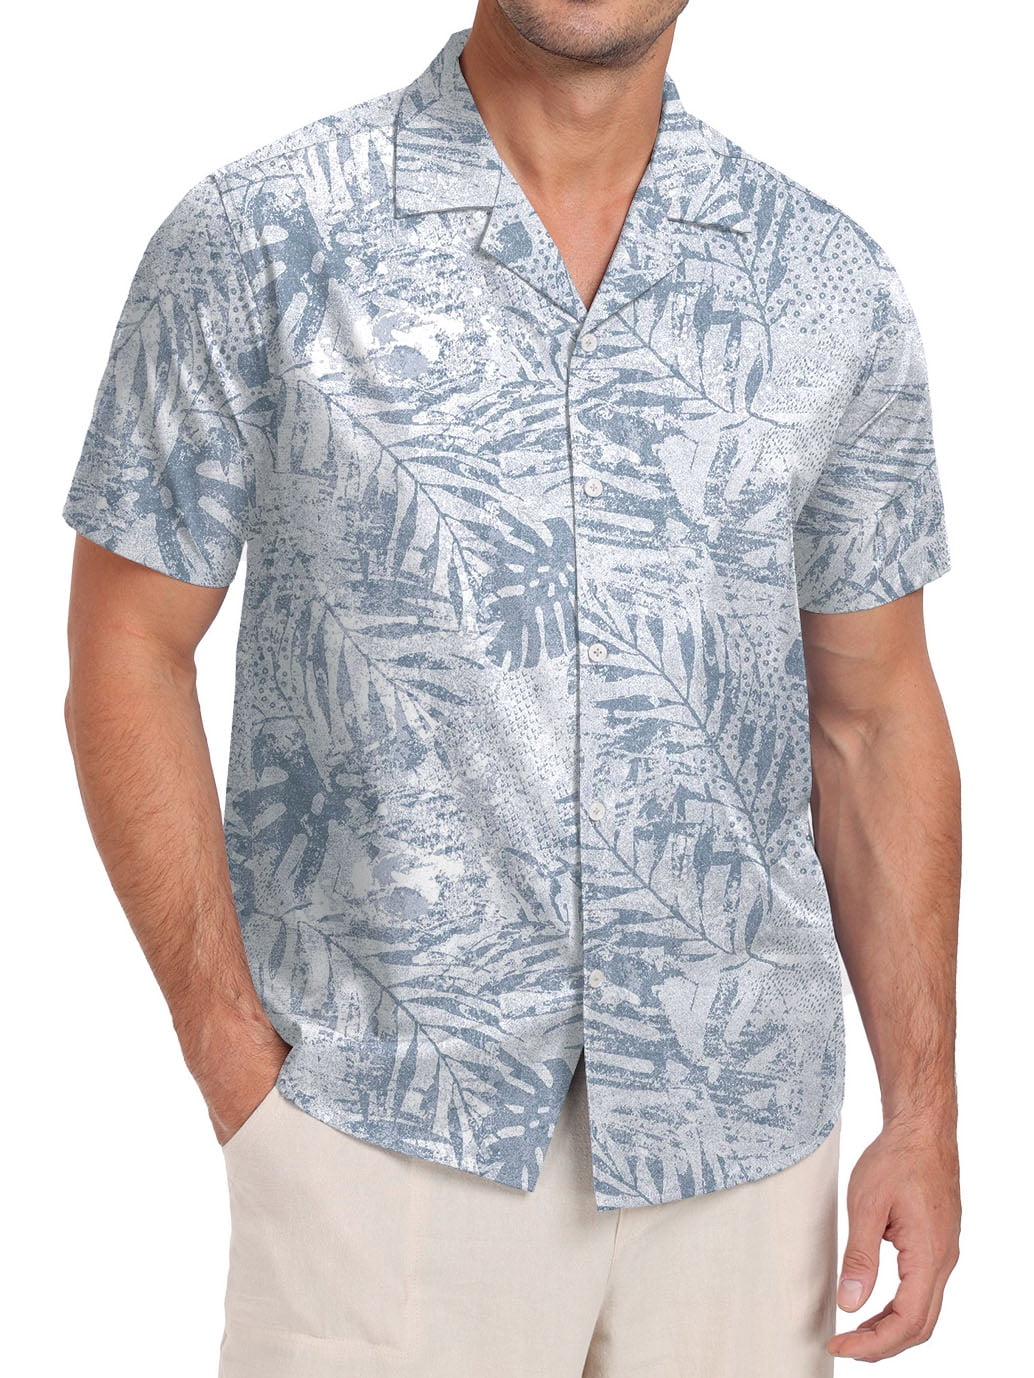 XMMSWDLA Hawaiian Shirt for Men, Summer Print Short Sleeve Button